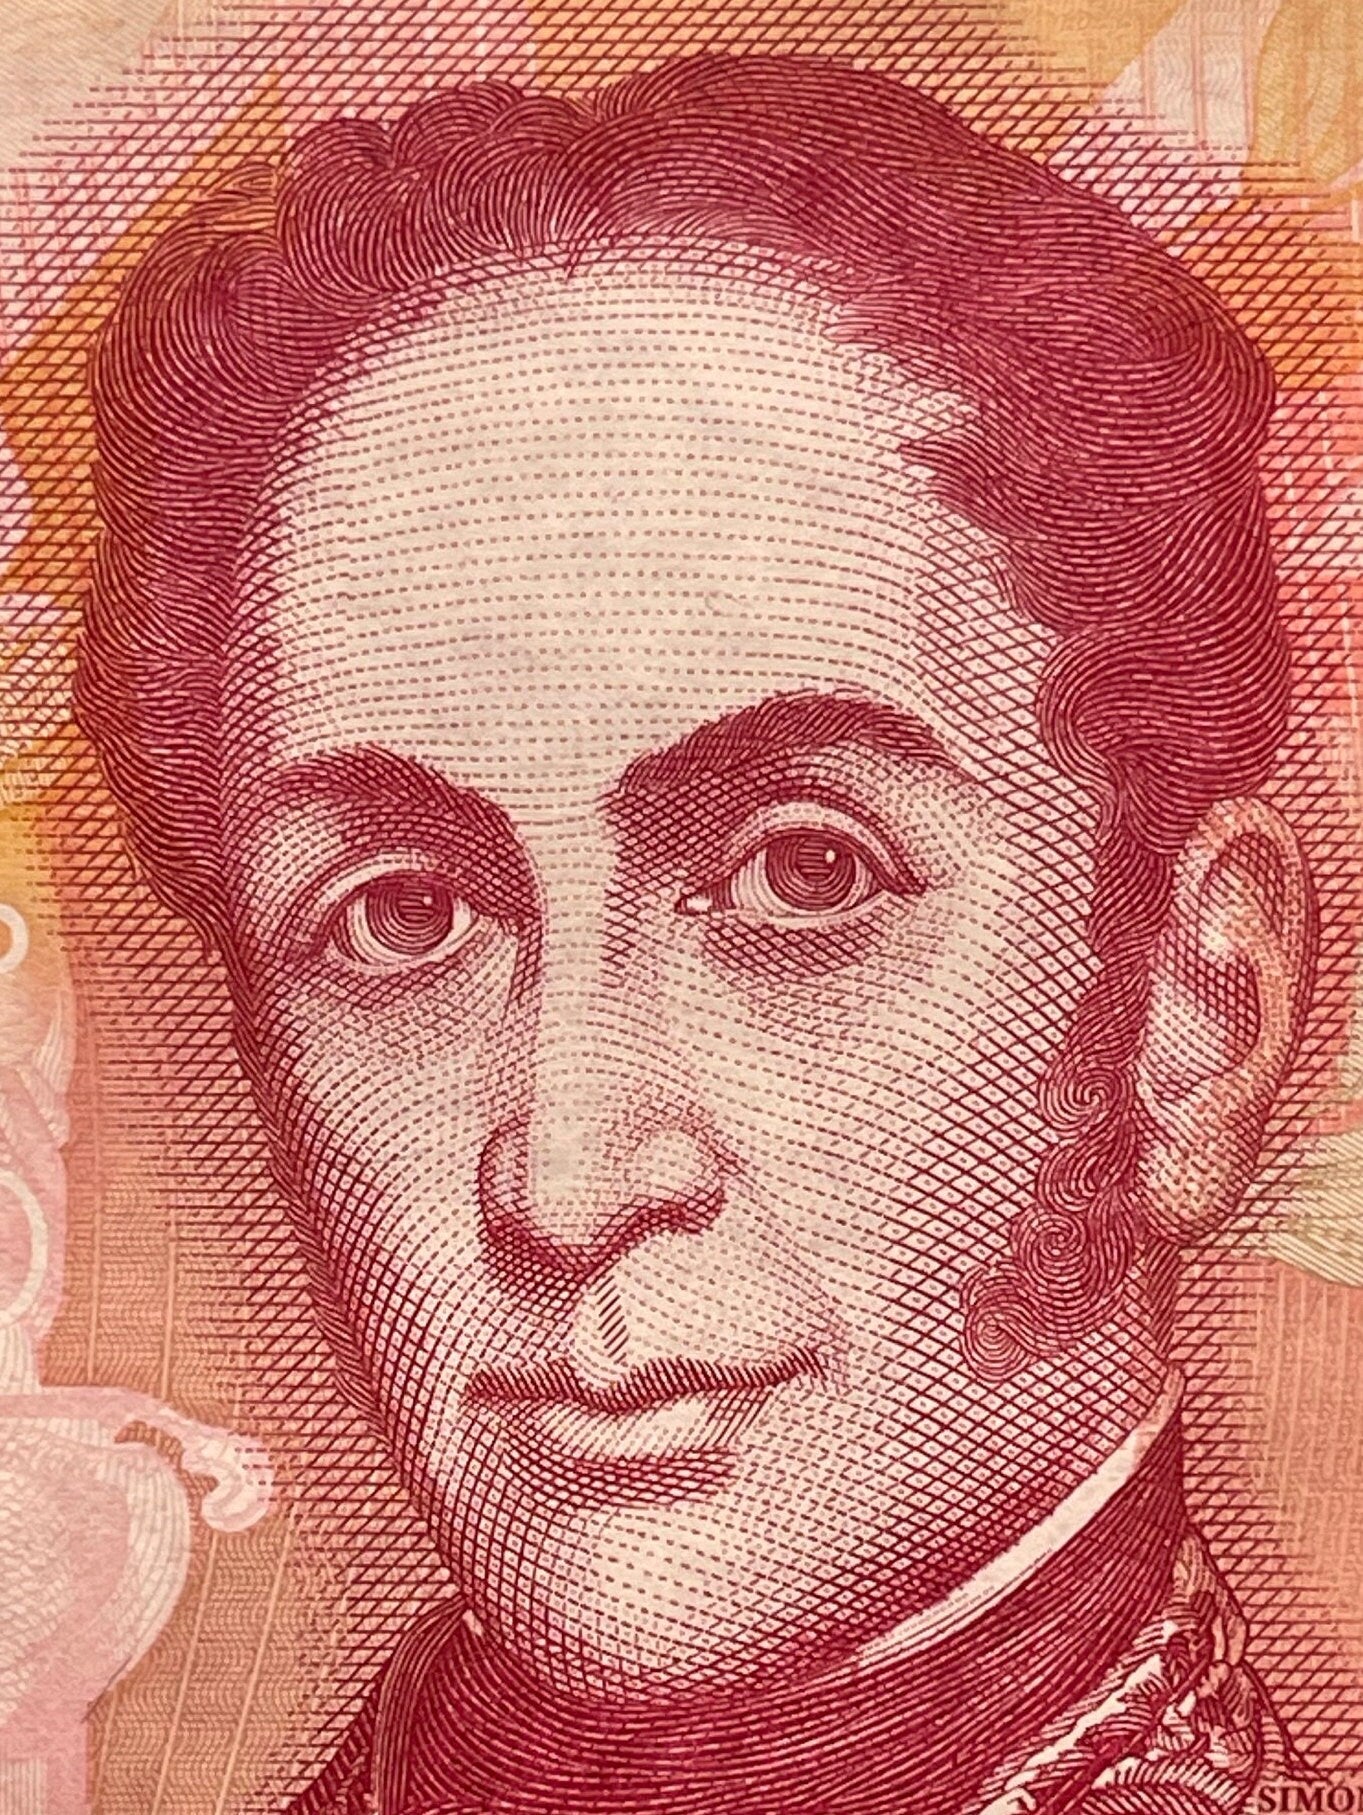 Liberator Simón Bolivar & Red Siskin Finches 20,000 Bolívares Venezuela Authentic Banknote Money for Collage (El Ávila National Park)